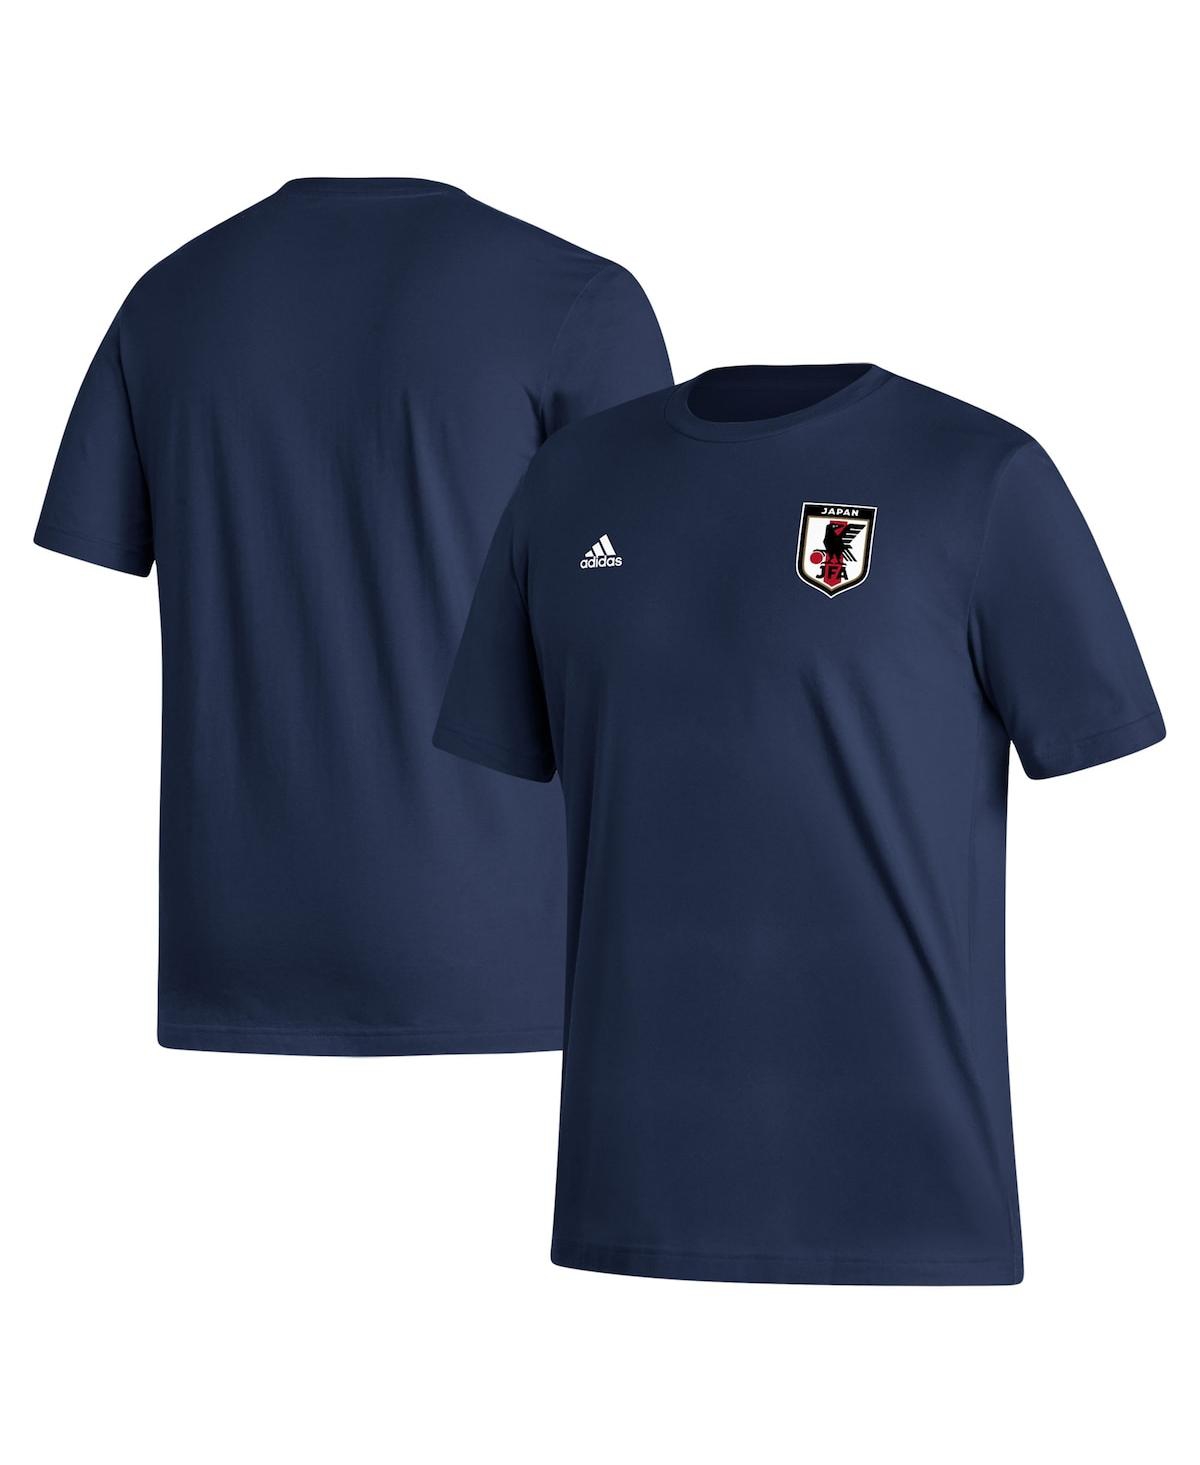 Adidas Originals Men's Navy Japan National Team Crest T-shirt In Blue